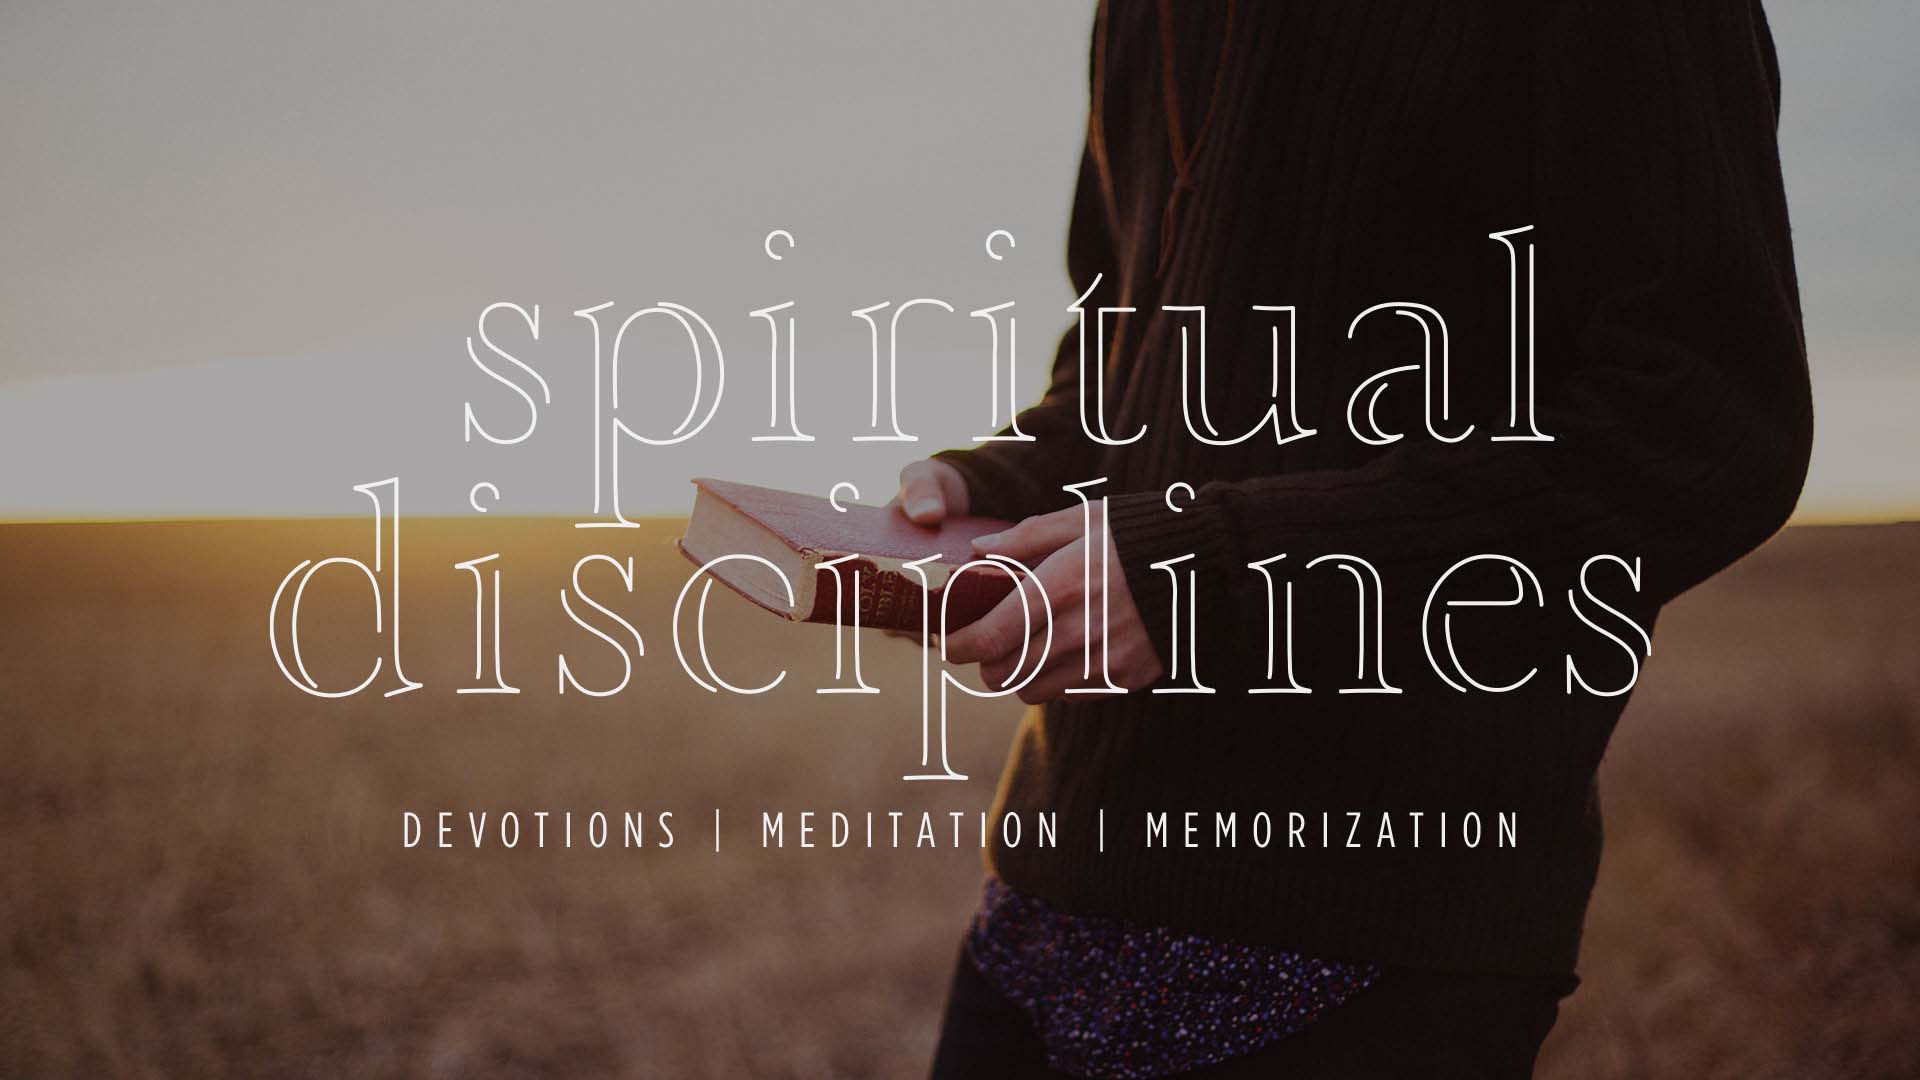 Spiritual Disciplines: Devotions | Meditation | Memorization